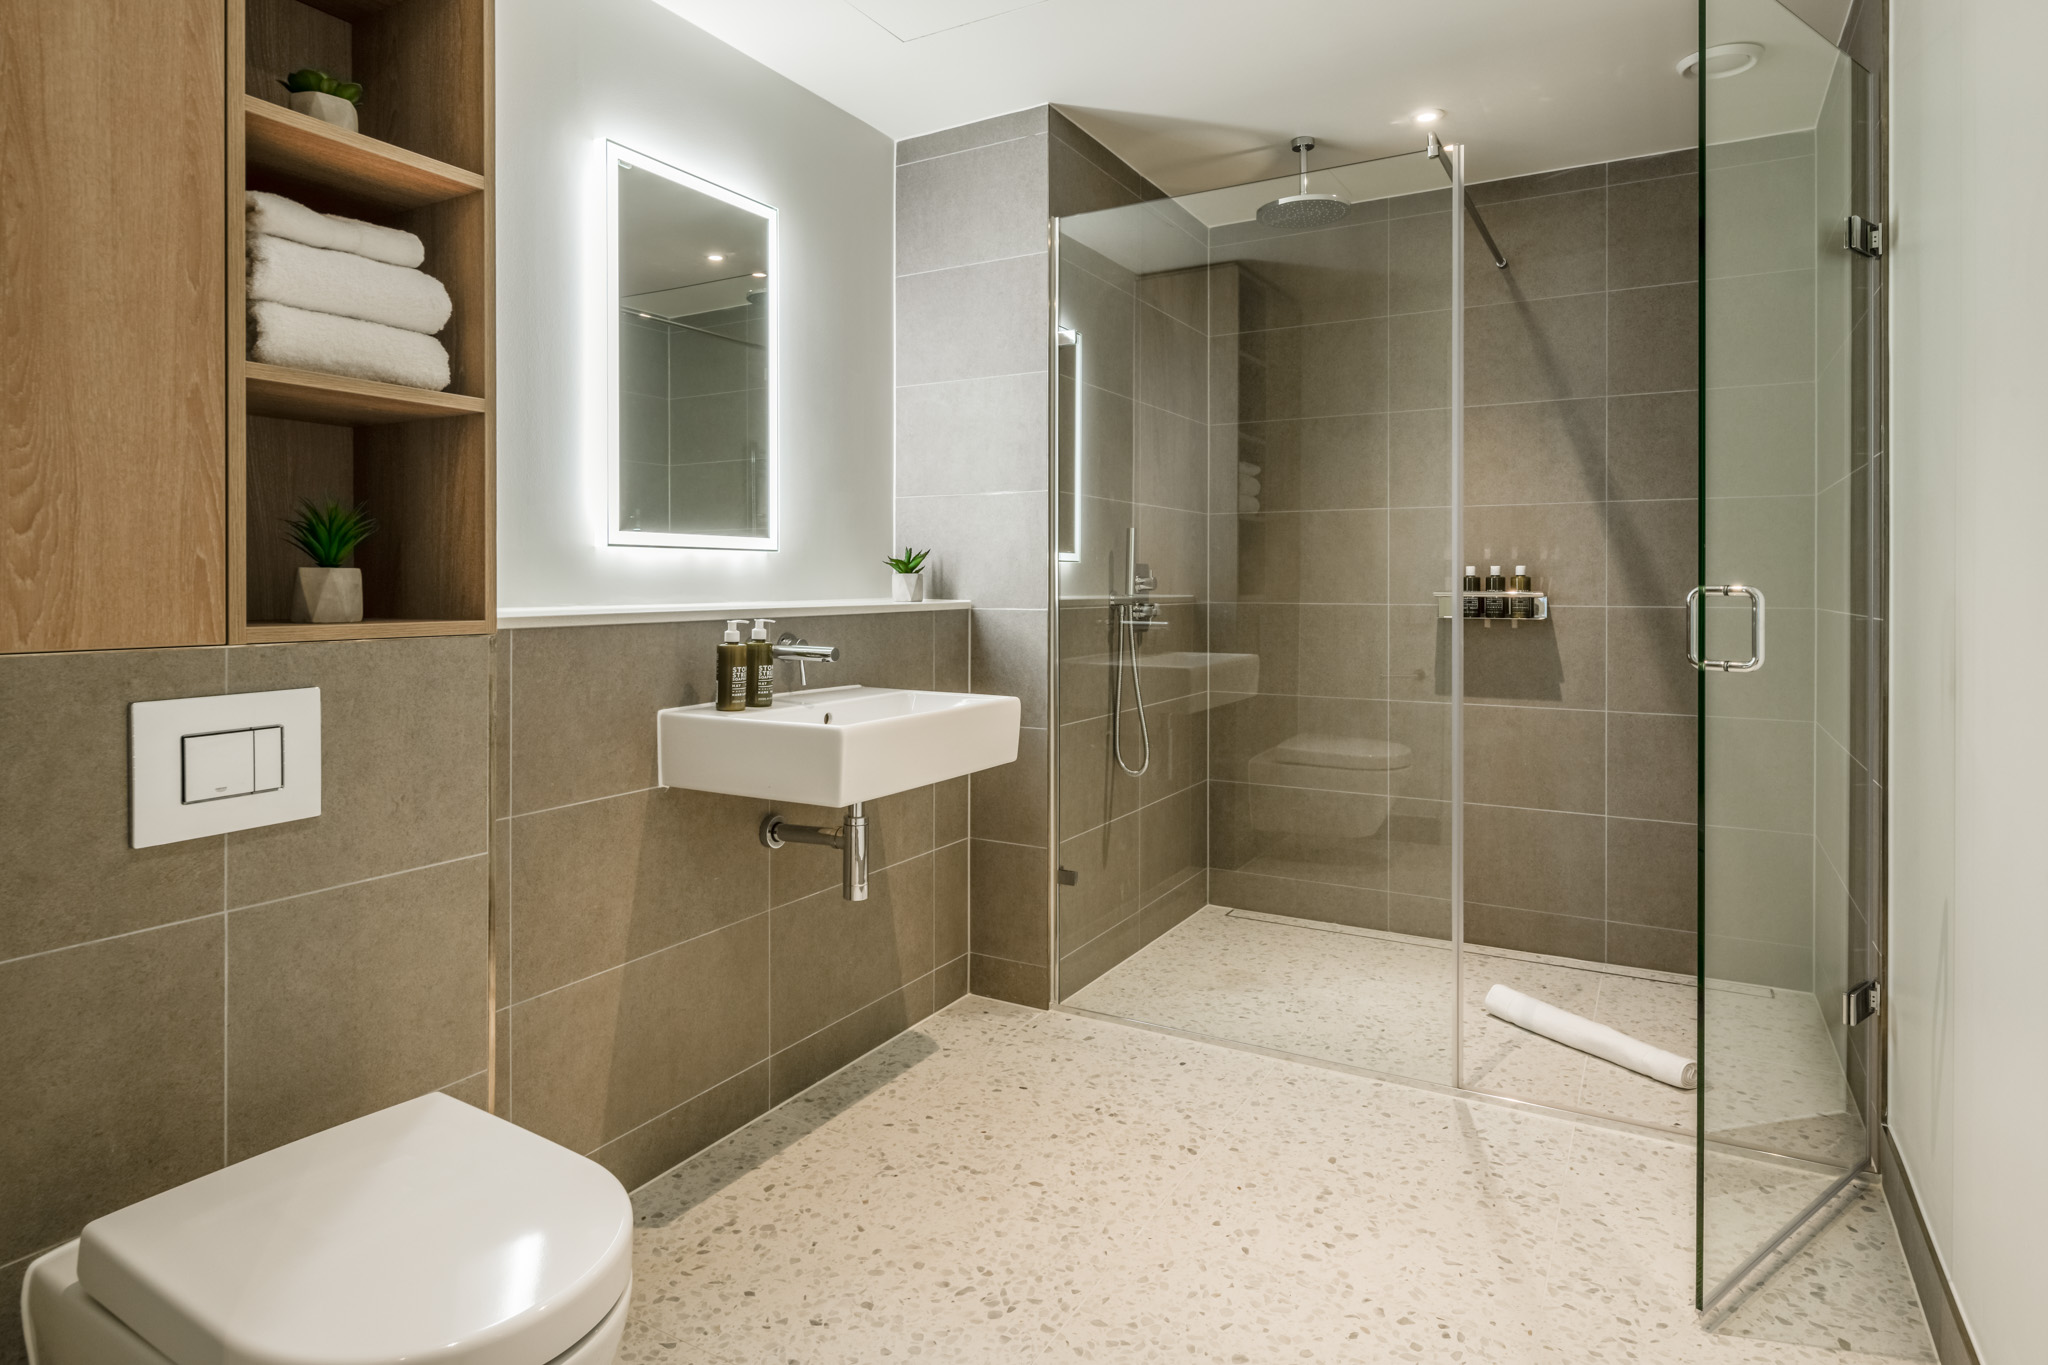 Bathroom - Two Bedroom Apartment - Urban rest Battersea Apartments - London - Urban Rest